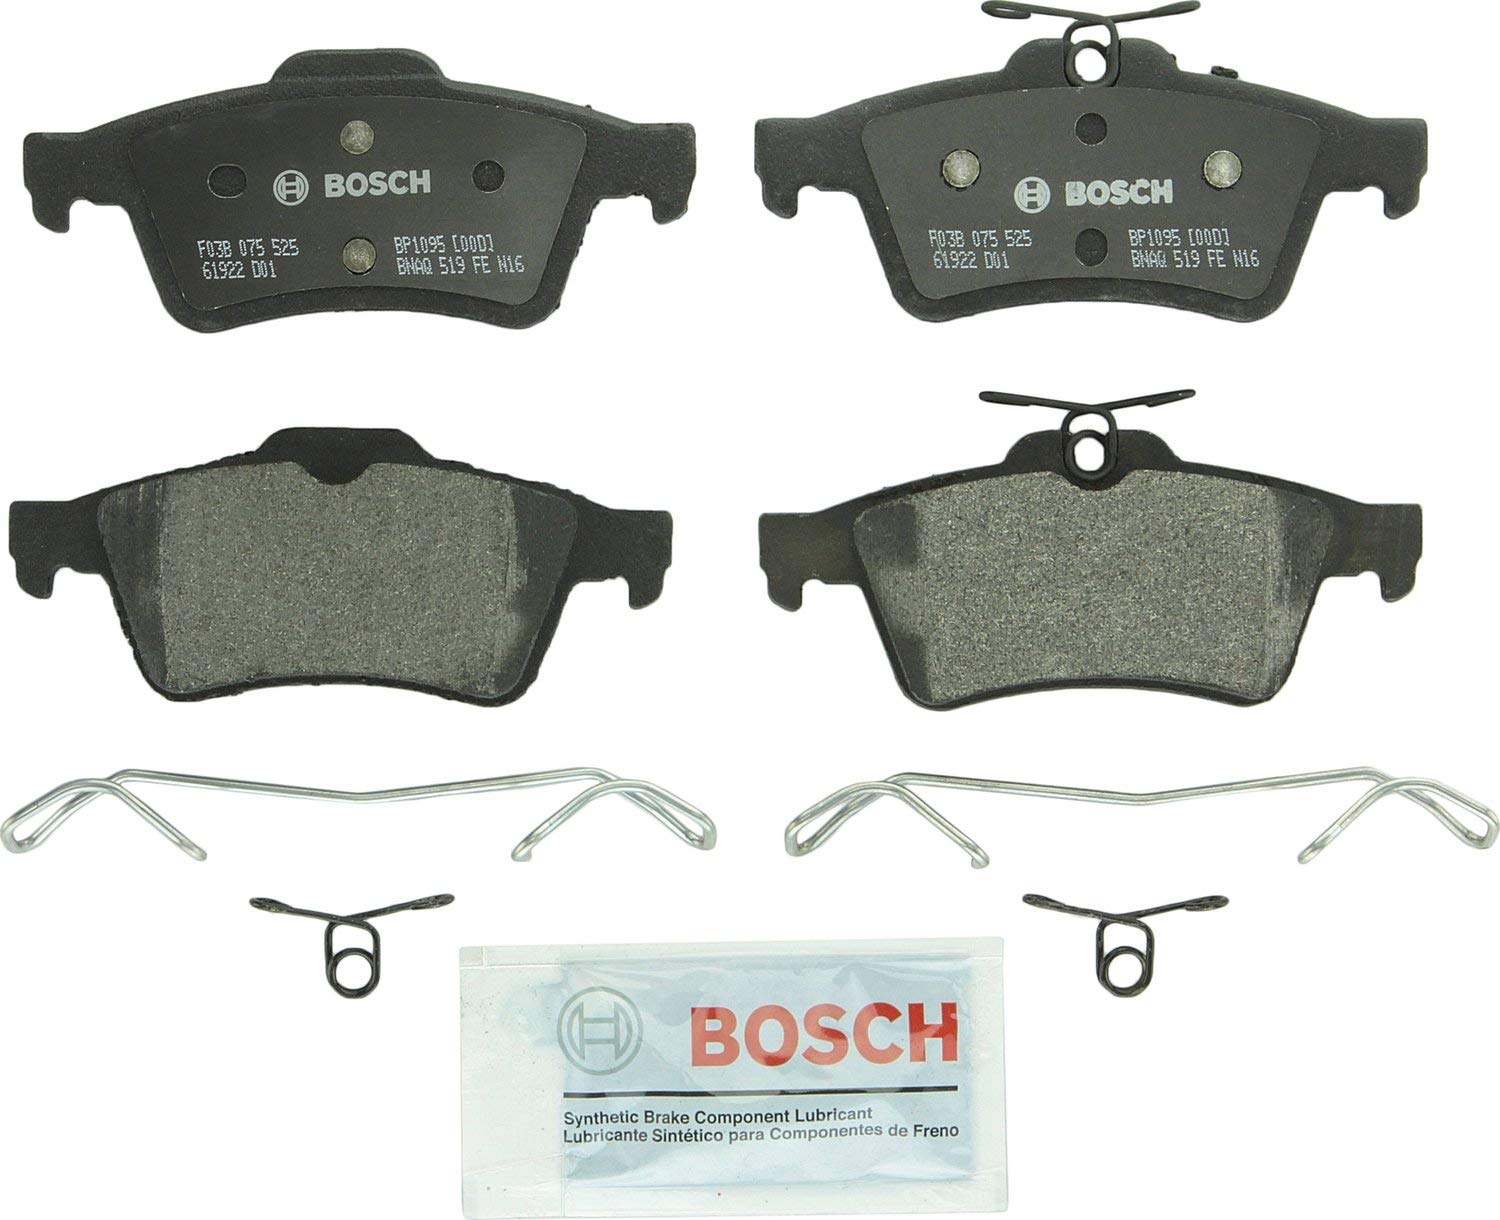 Bosch BP1095 QuietCast Premium Semi-Metallic Disc Brake Pad Set For: Cadillac; Chevrolet; Ford C-Max, Focus, Escape, Transit Connect; Jaguar; Mazda; Pontiac; Saab; Saturn; Volvo, Rear